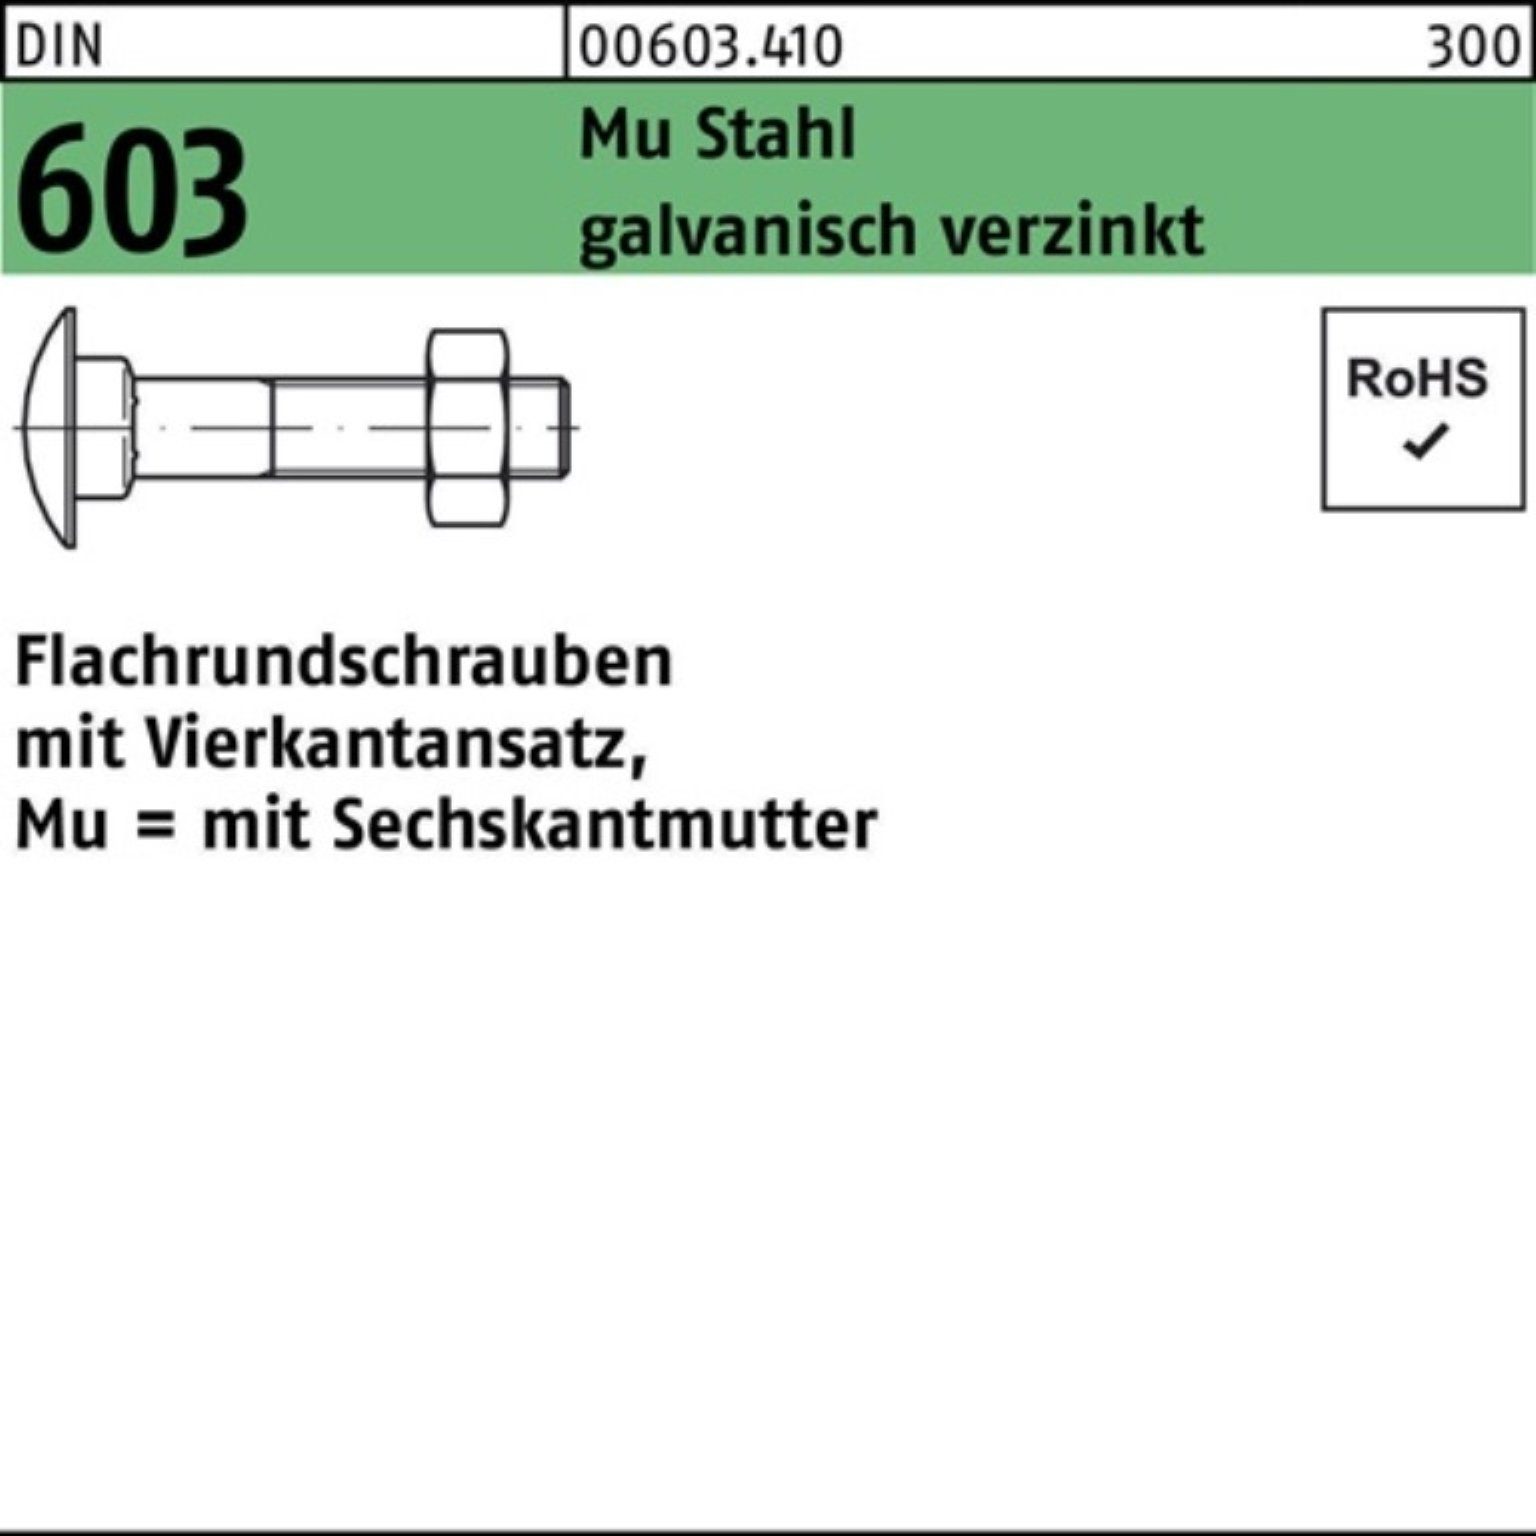 Schraube Vierkantansatz/6-ktmutter Reyher M12x90 Pack 100er DIN 603 Flachrundschraube